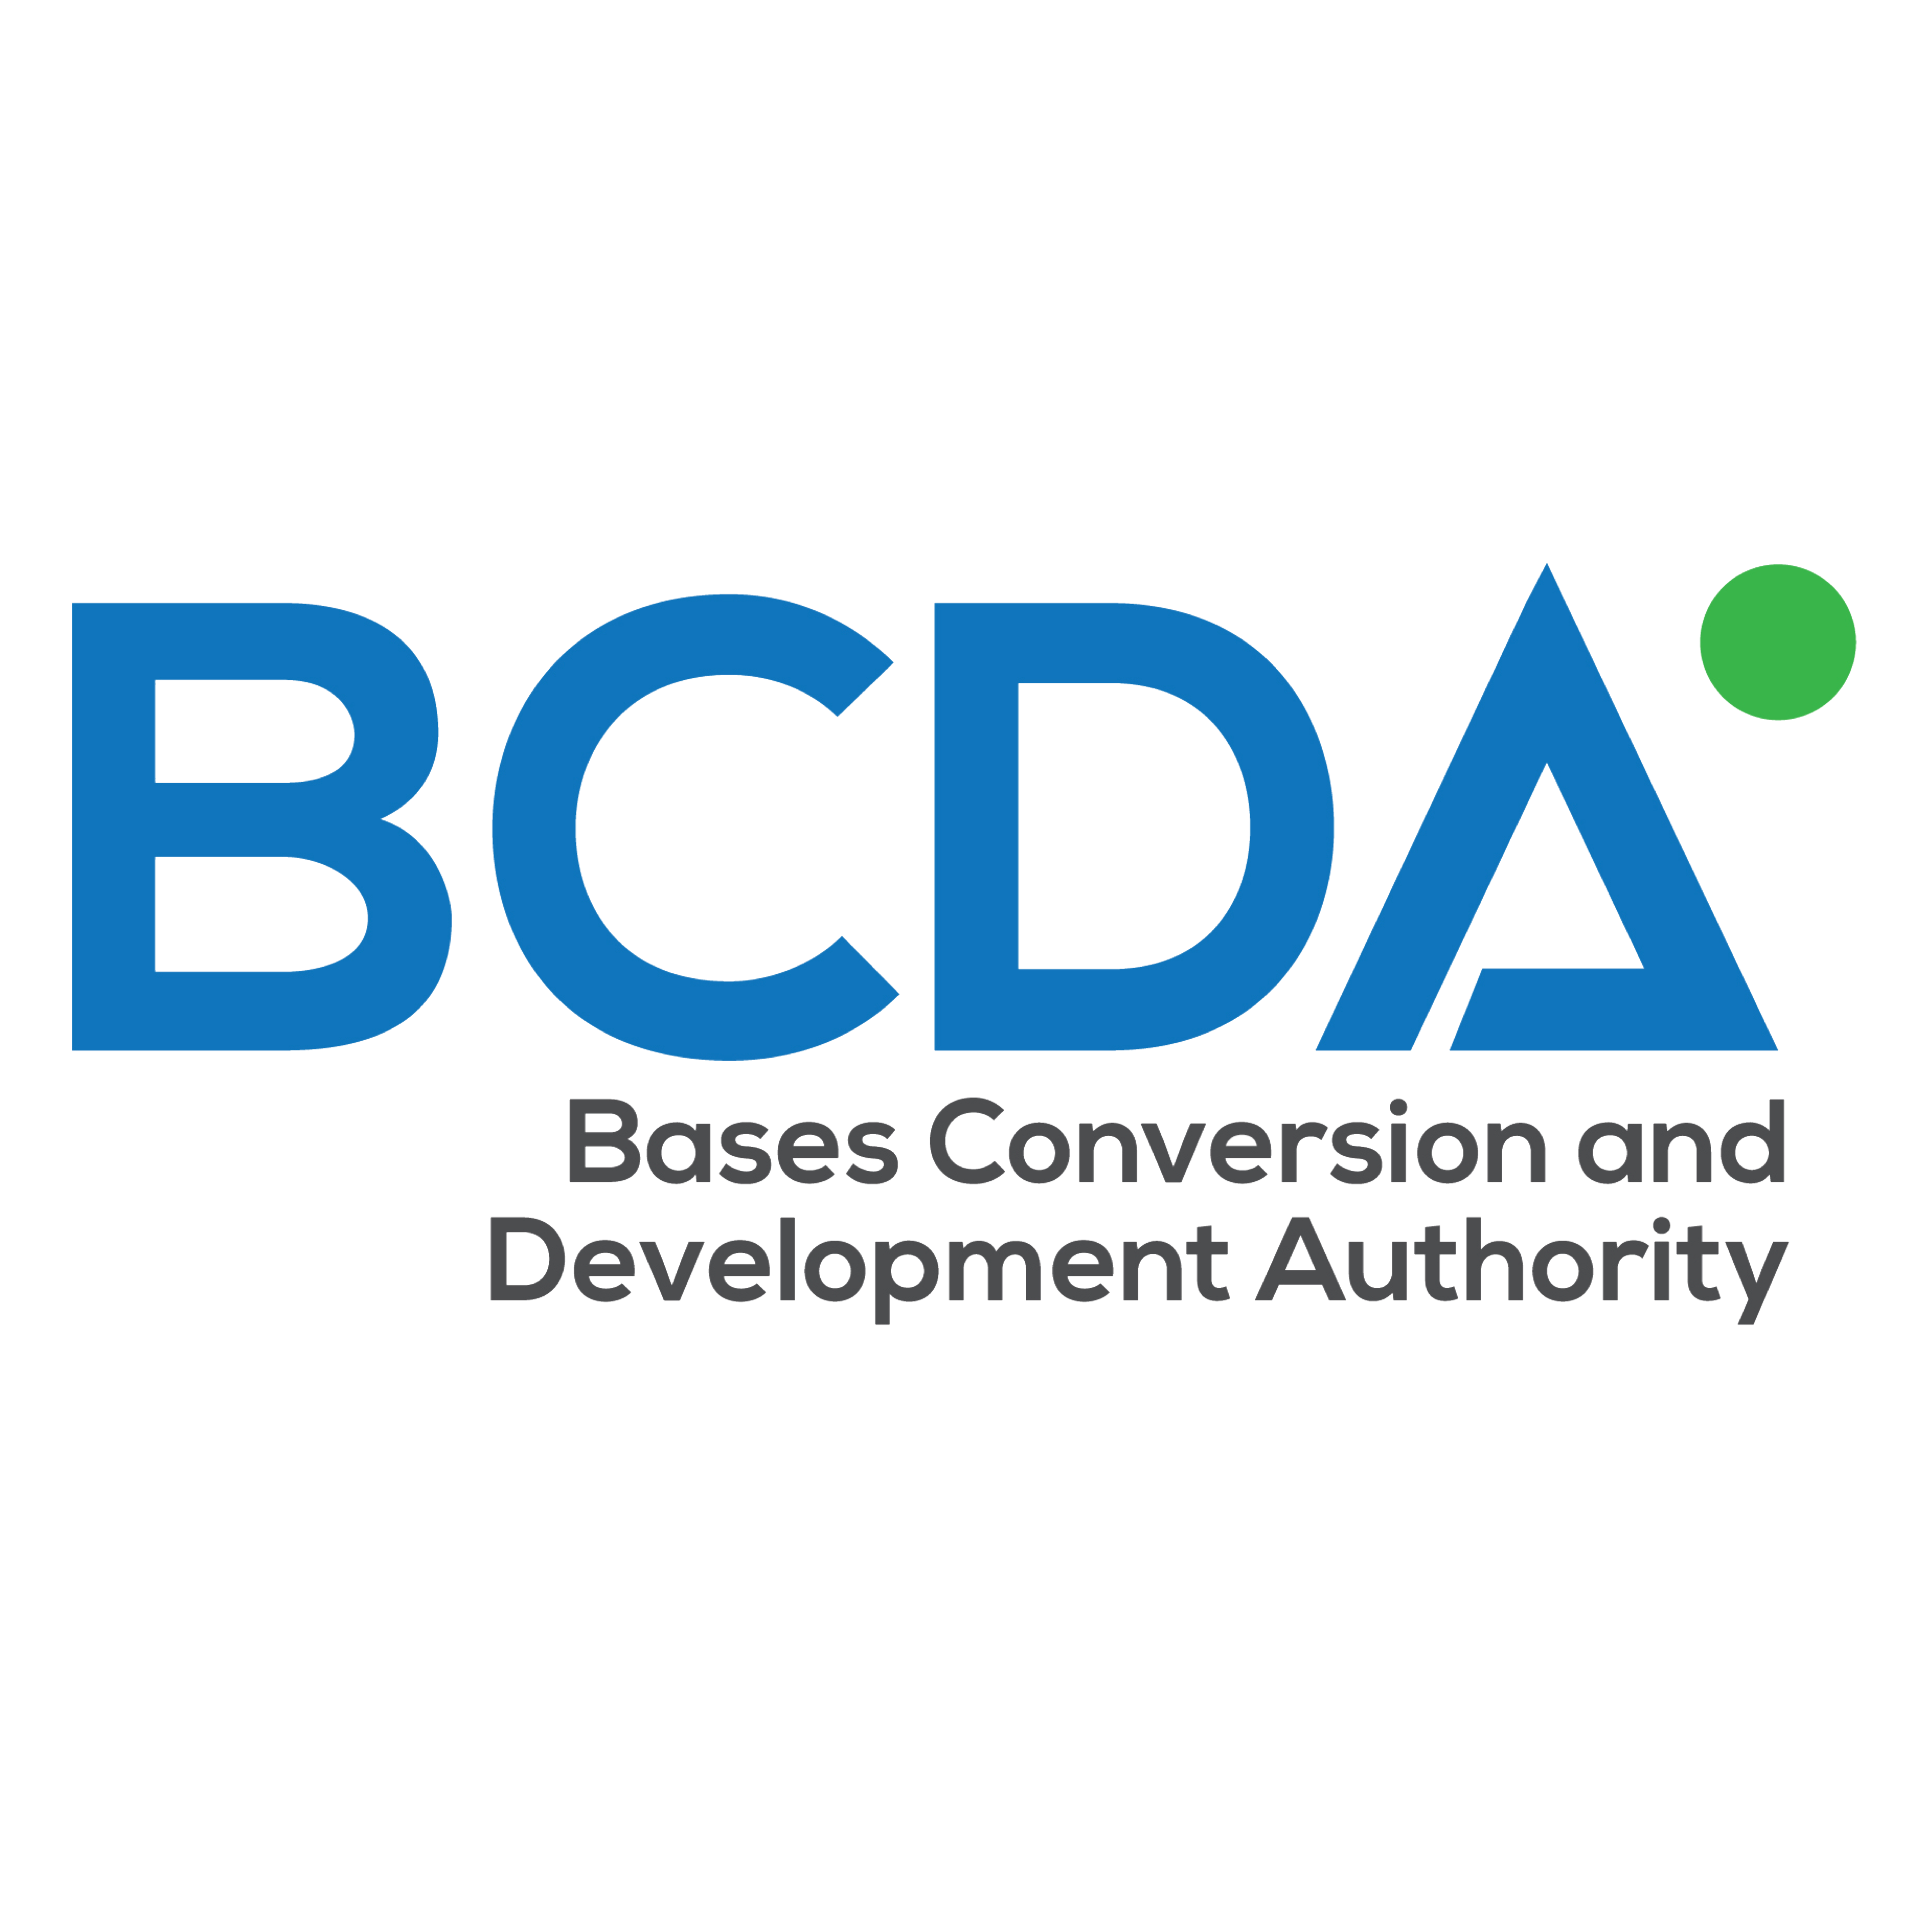 The BCDA Group